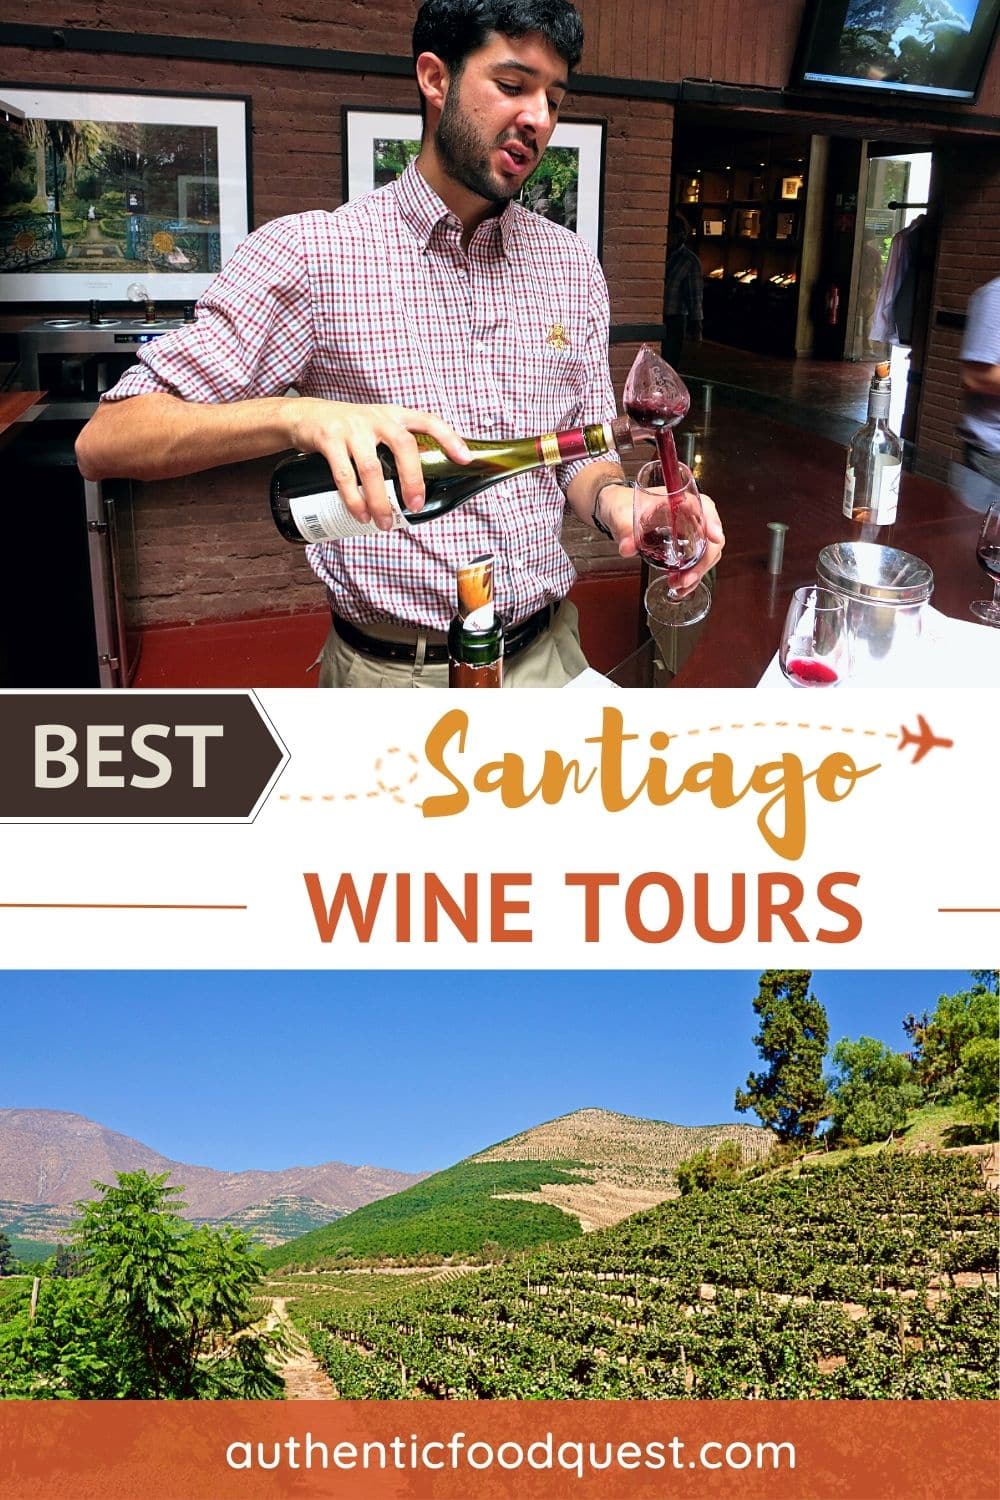 wine tours in santiago chile